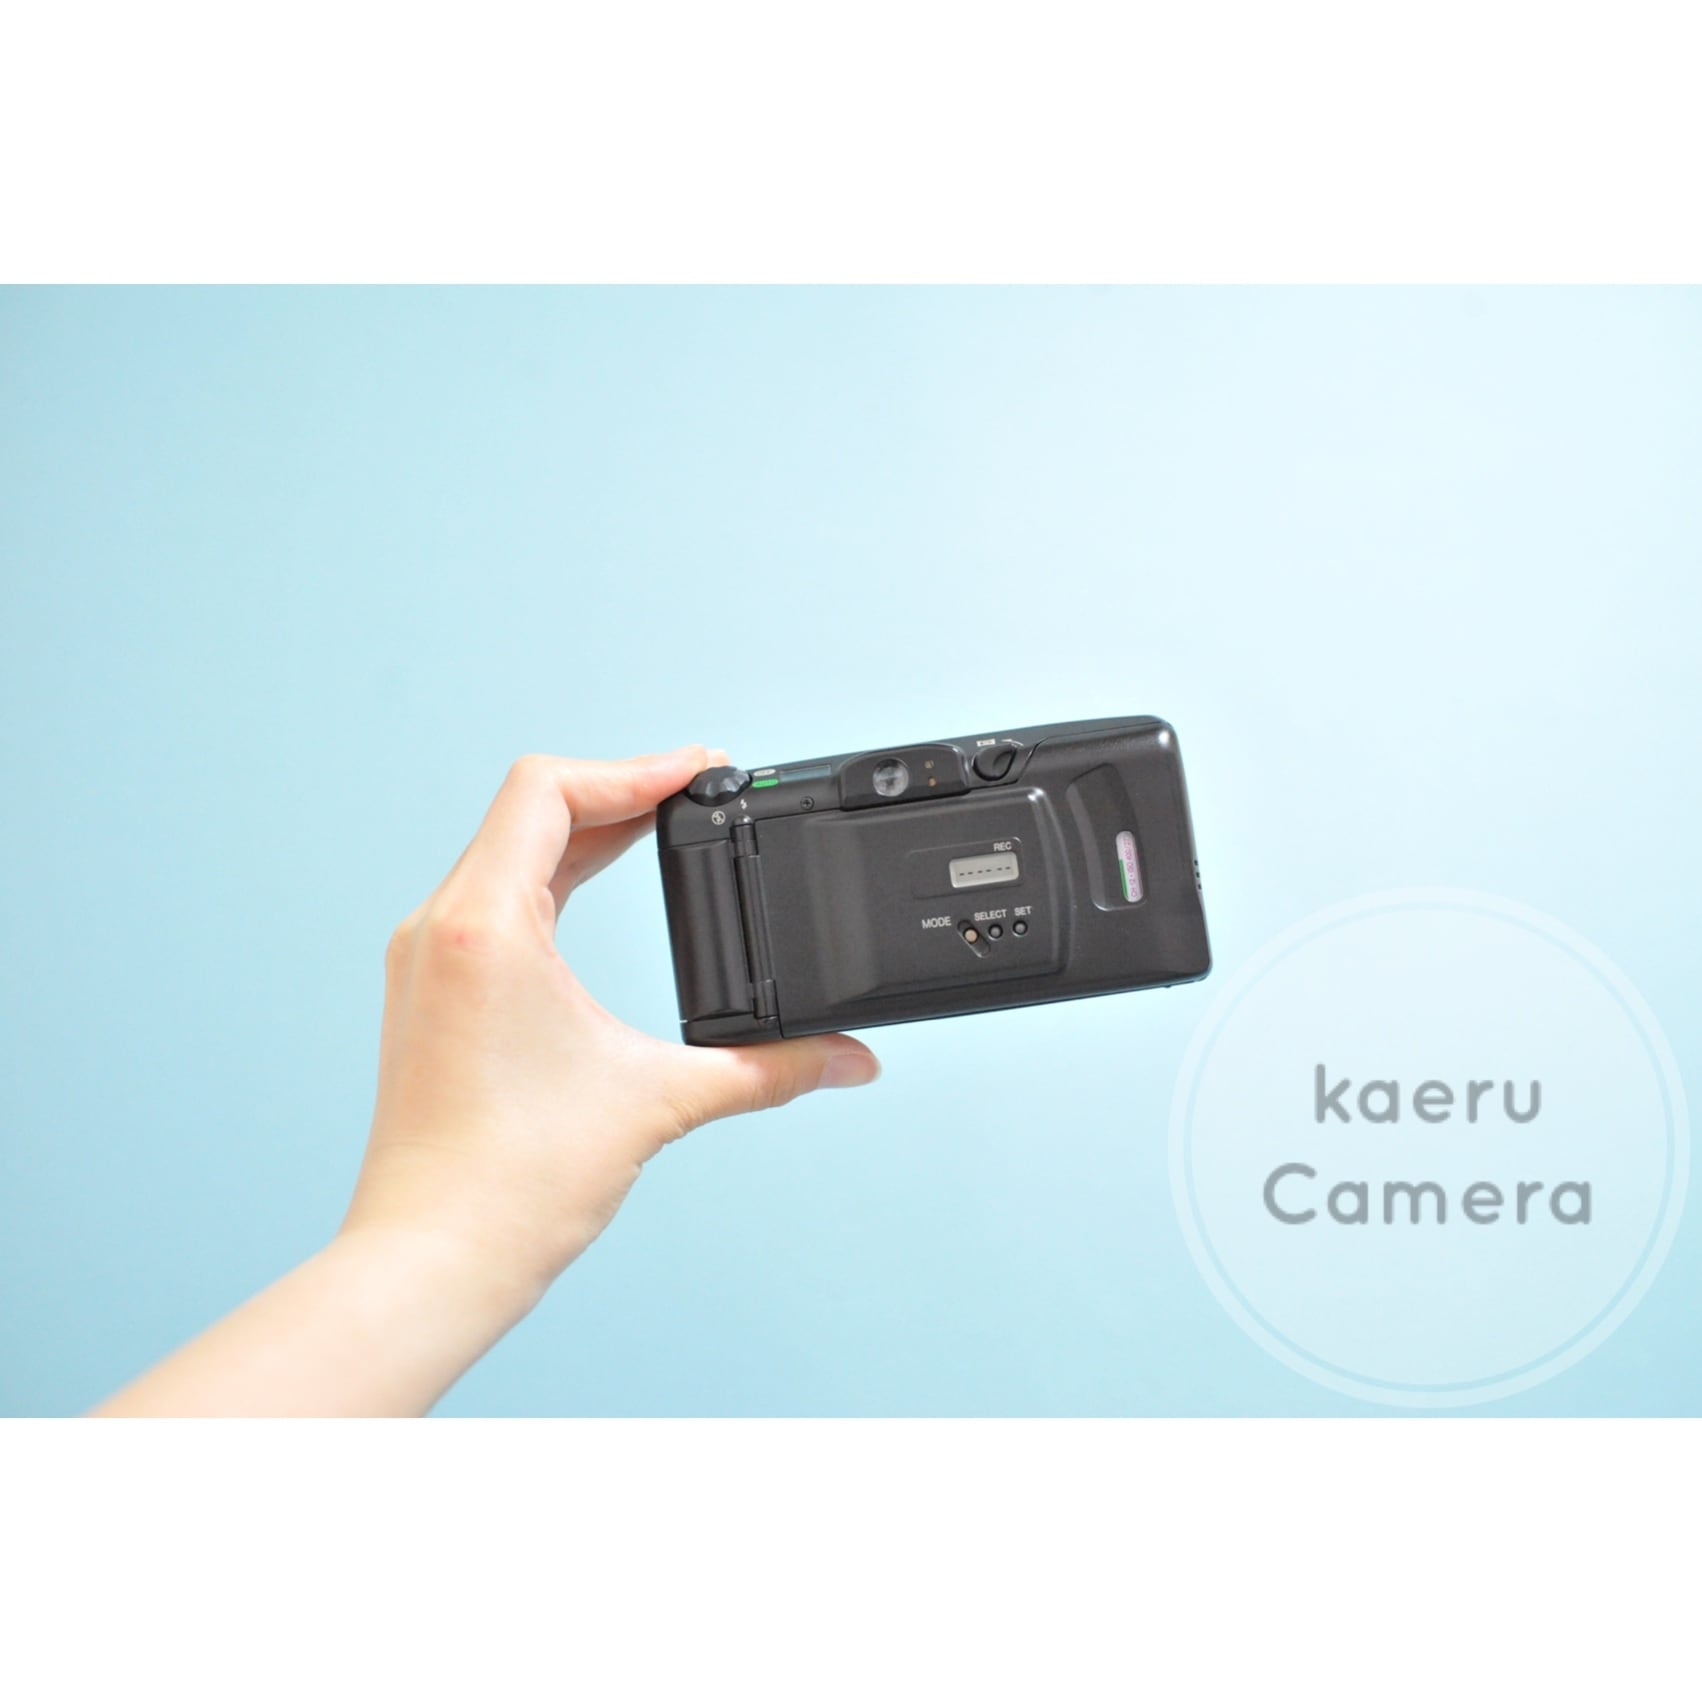 Canon Autoboy Luna 105 フィルムカメラ | kaerucameraOnlineshop